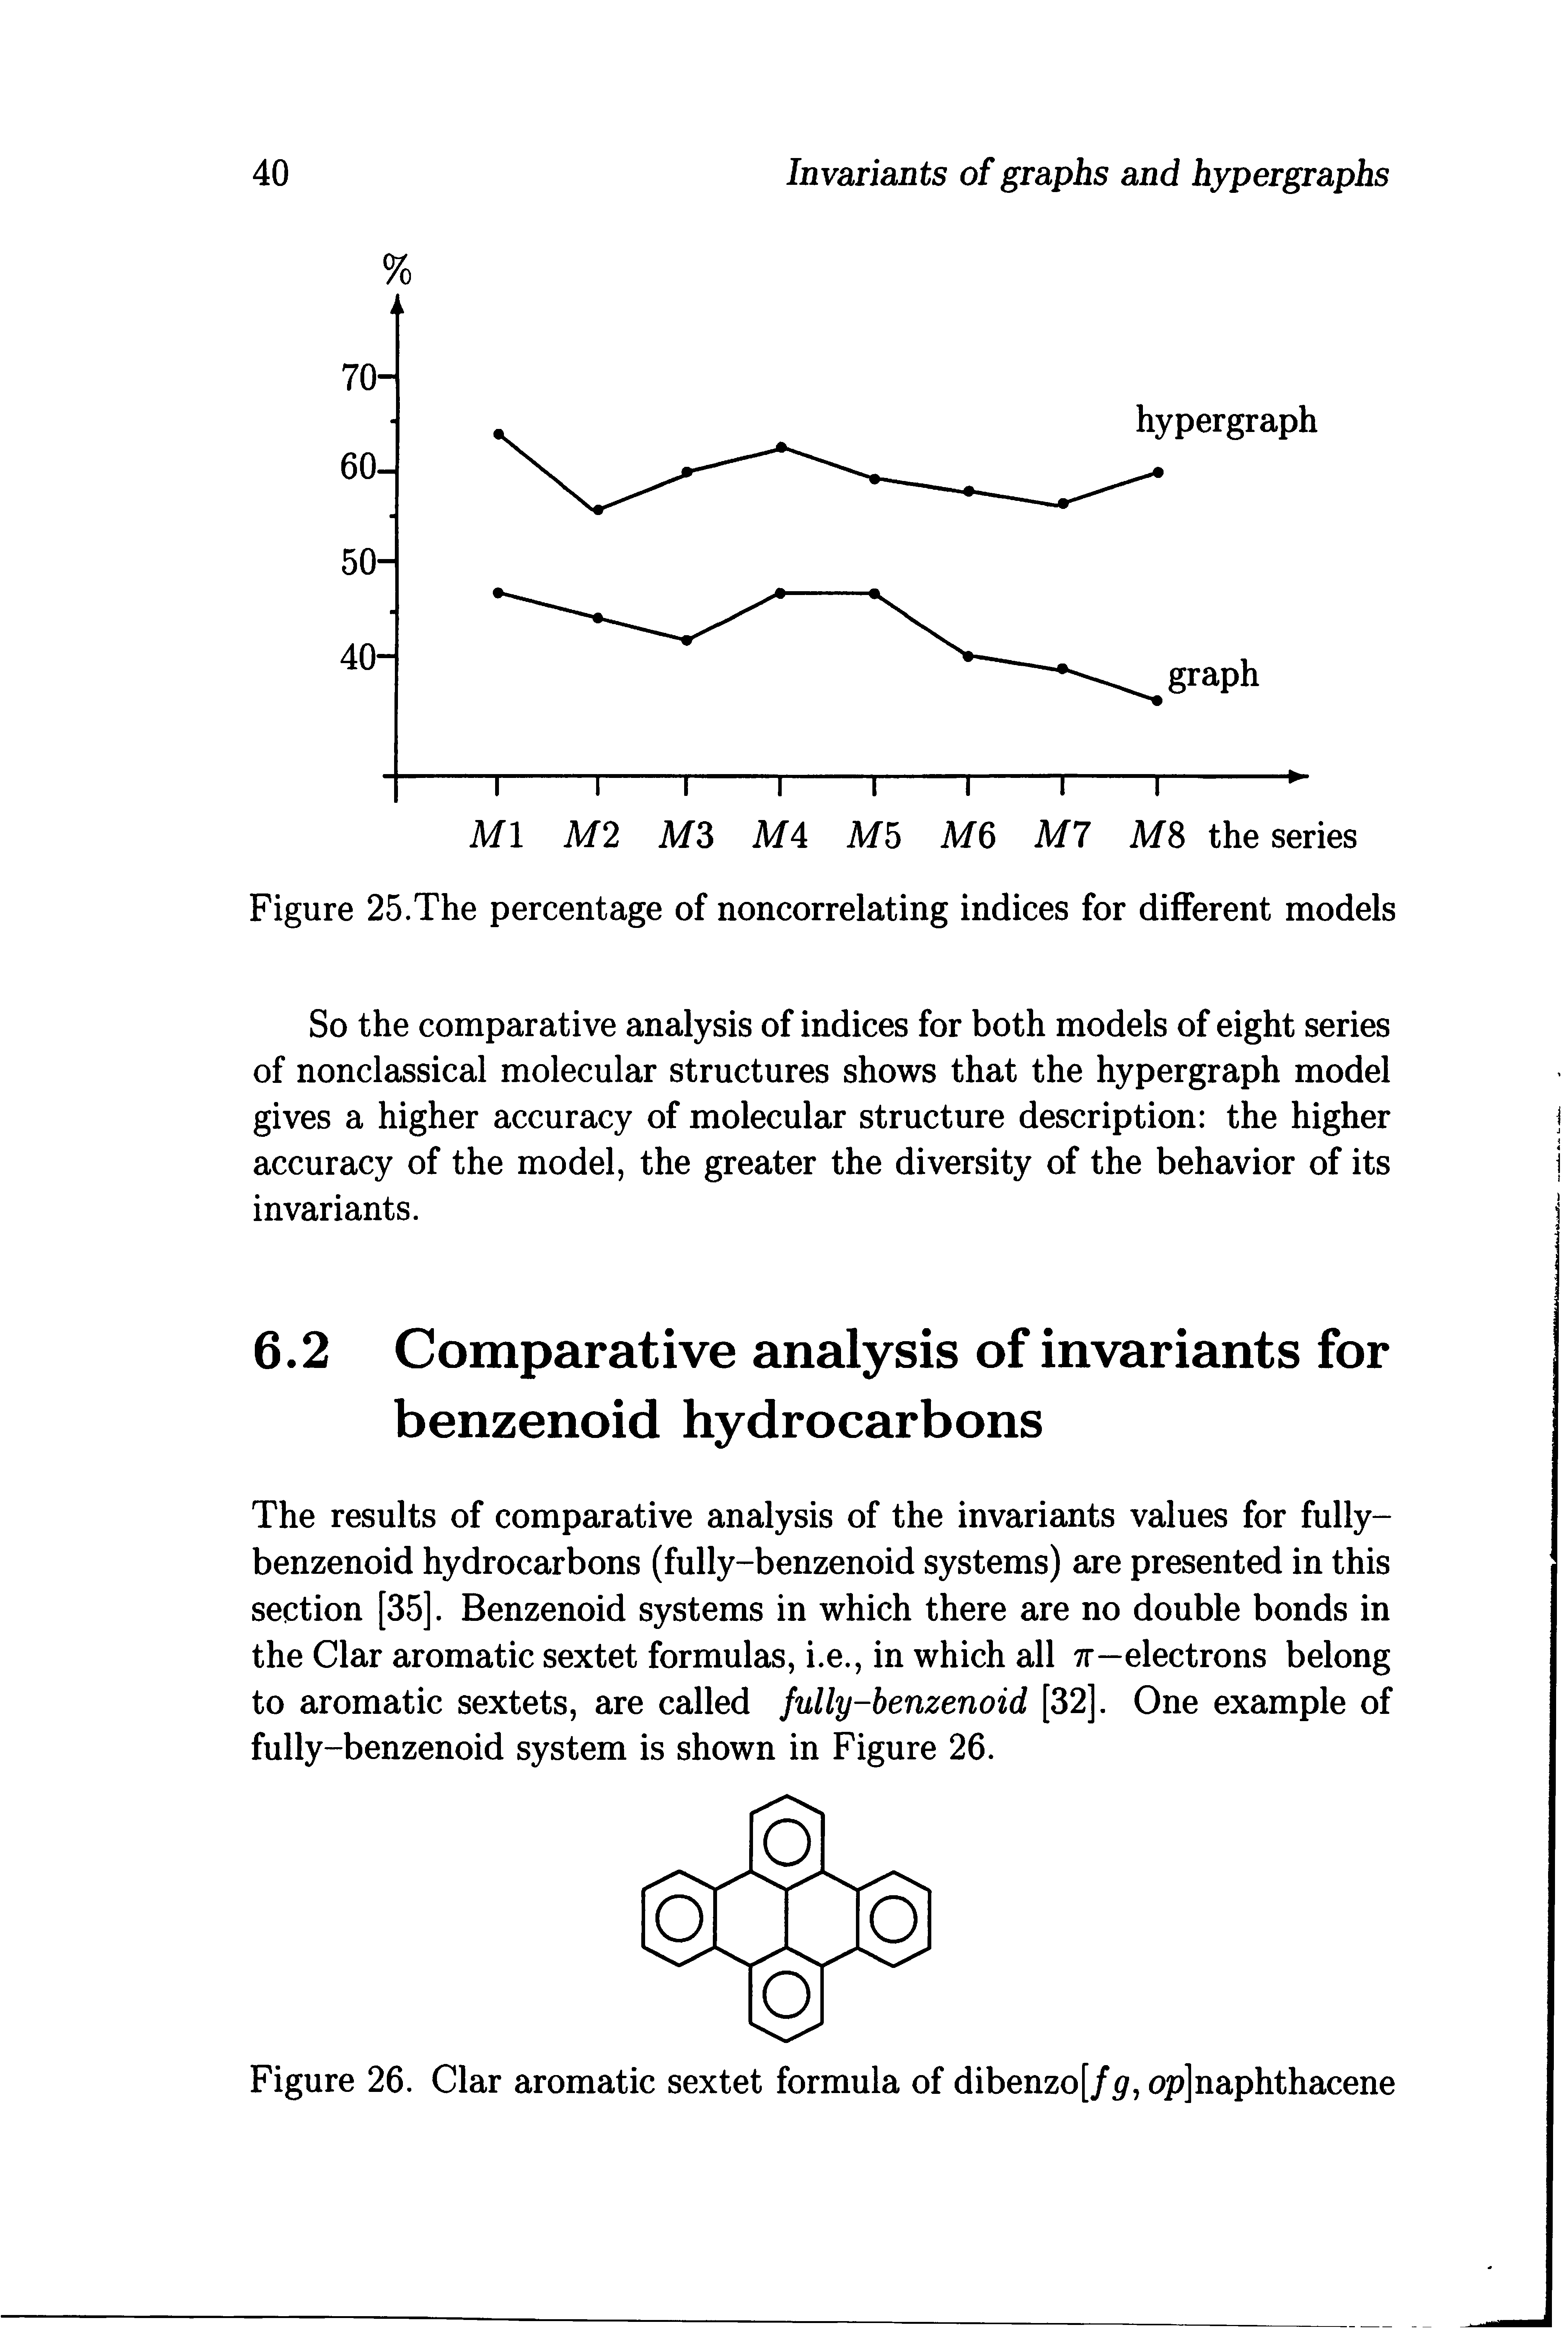 Figure 26. Clar aromatic sextet formula of dibenzo[/, op]naphthacene...